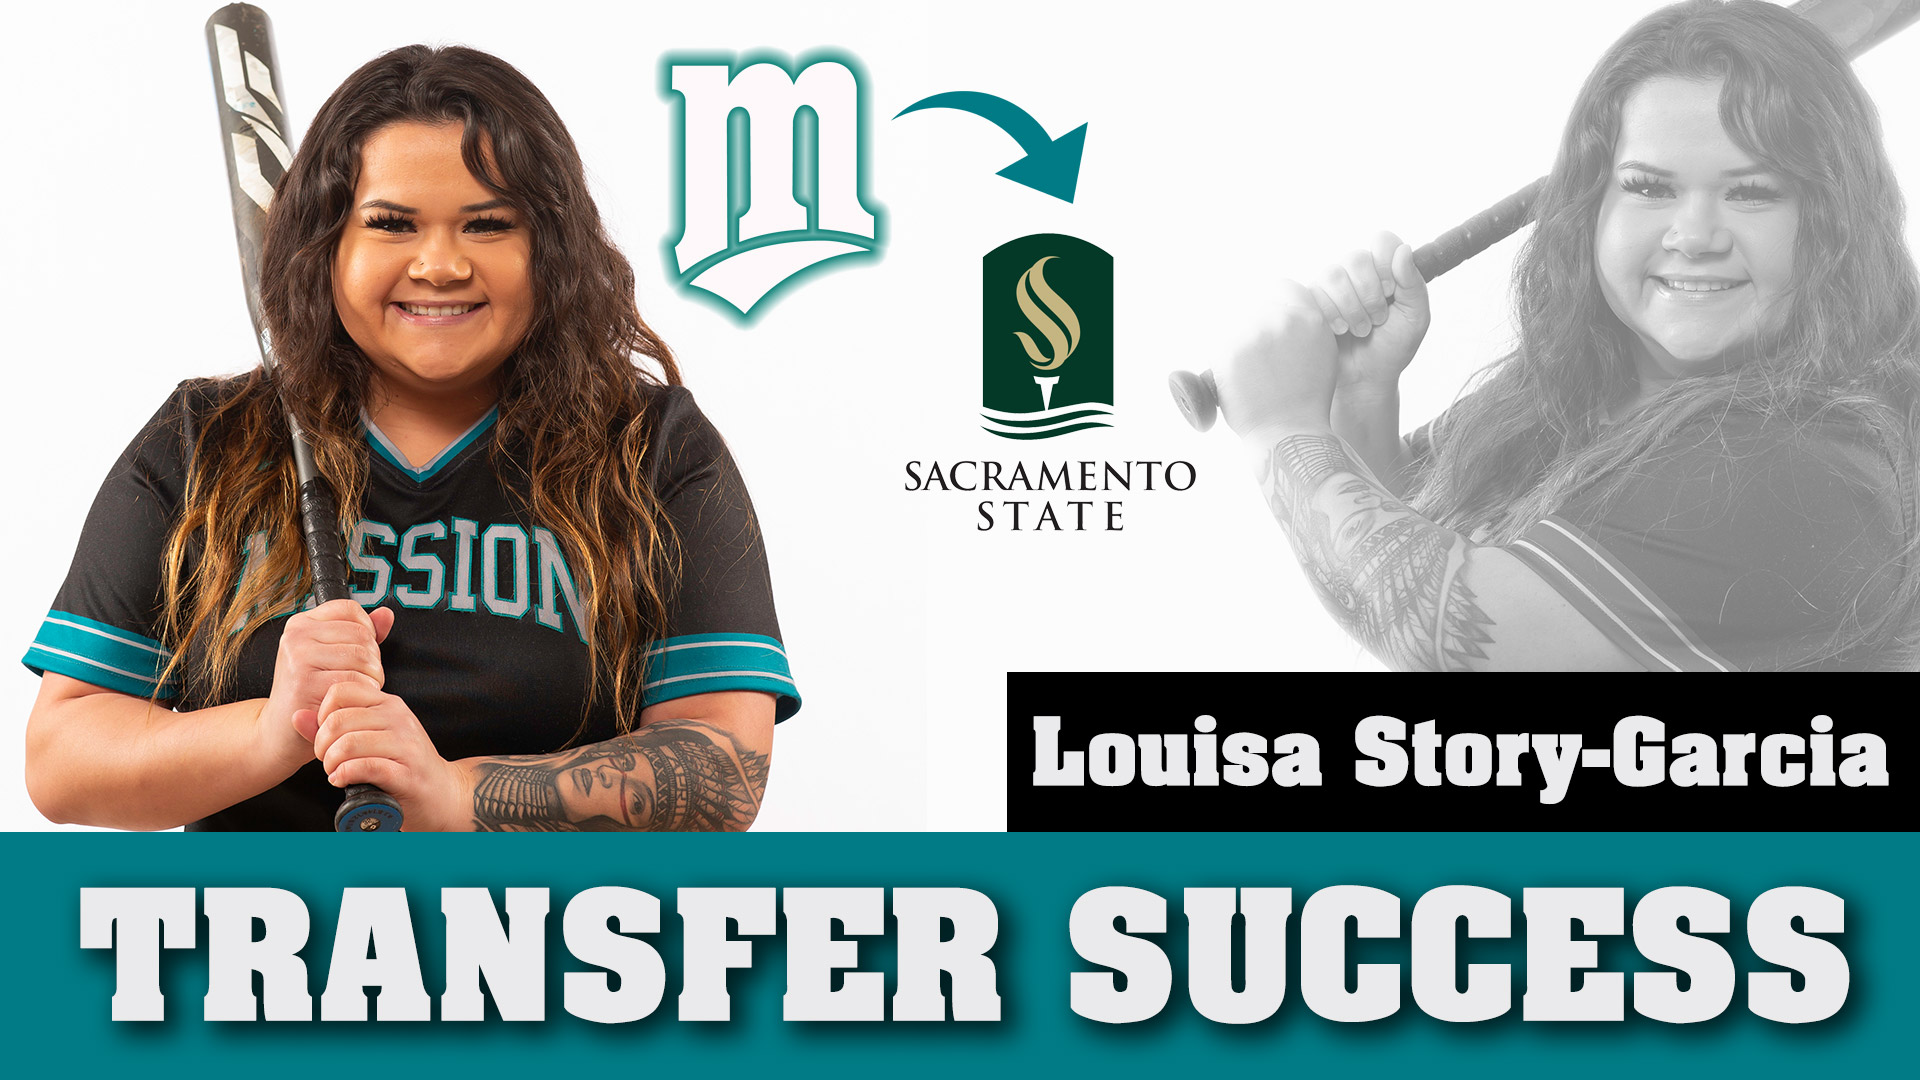 Louisa Story-Garcia will transfer to Sacramento State.